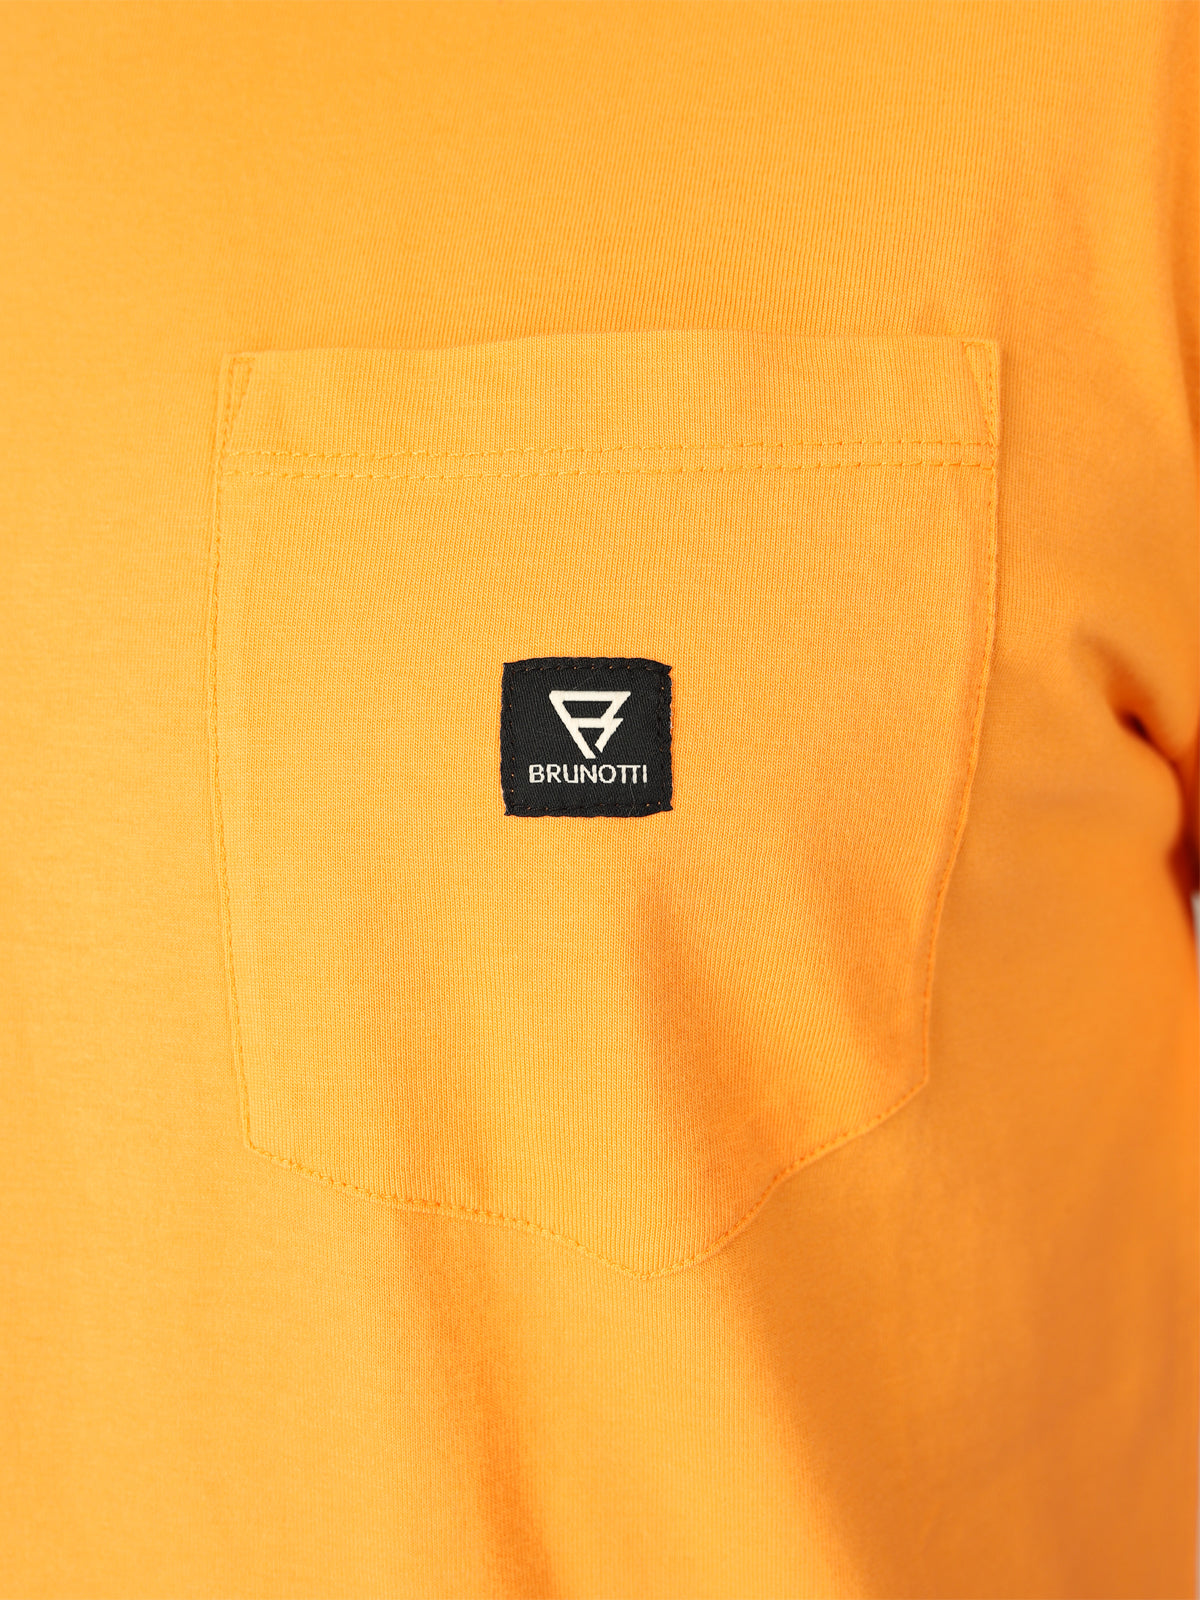 Axle Men T-Shirt | Orange